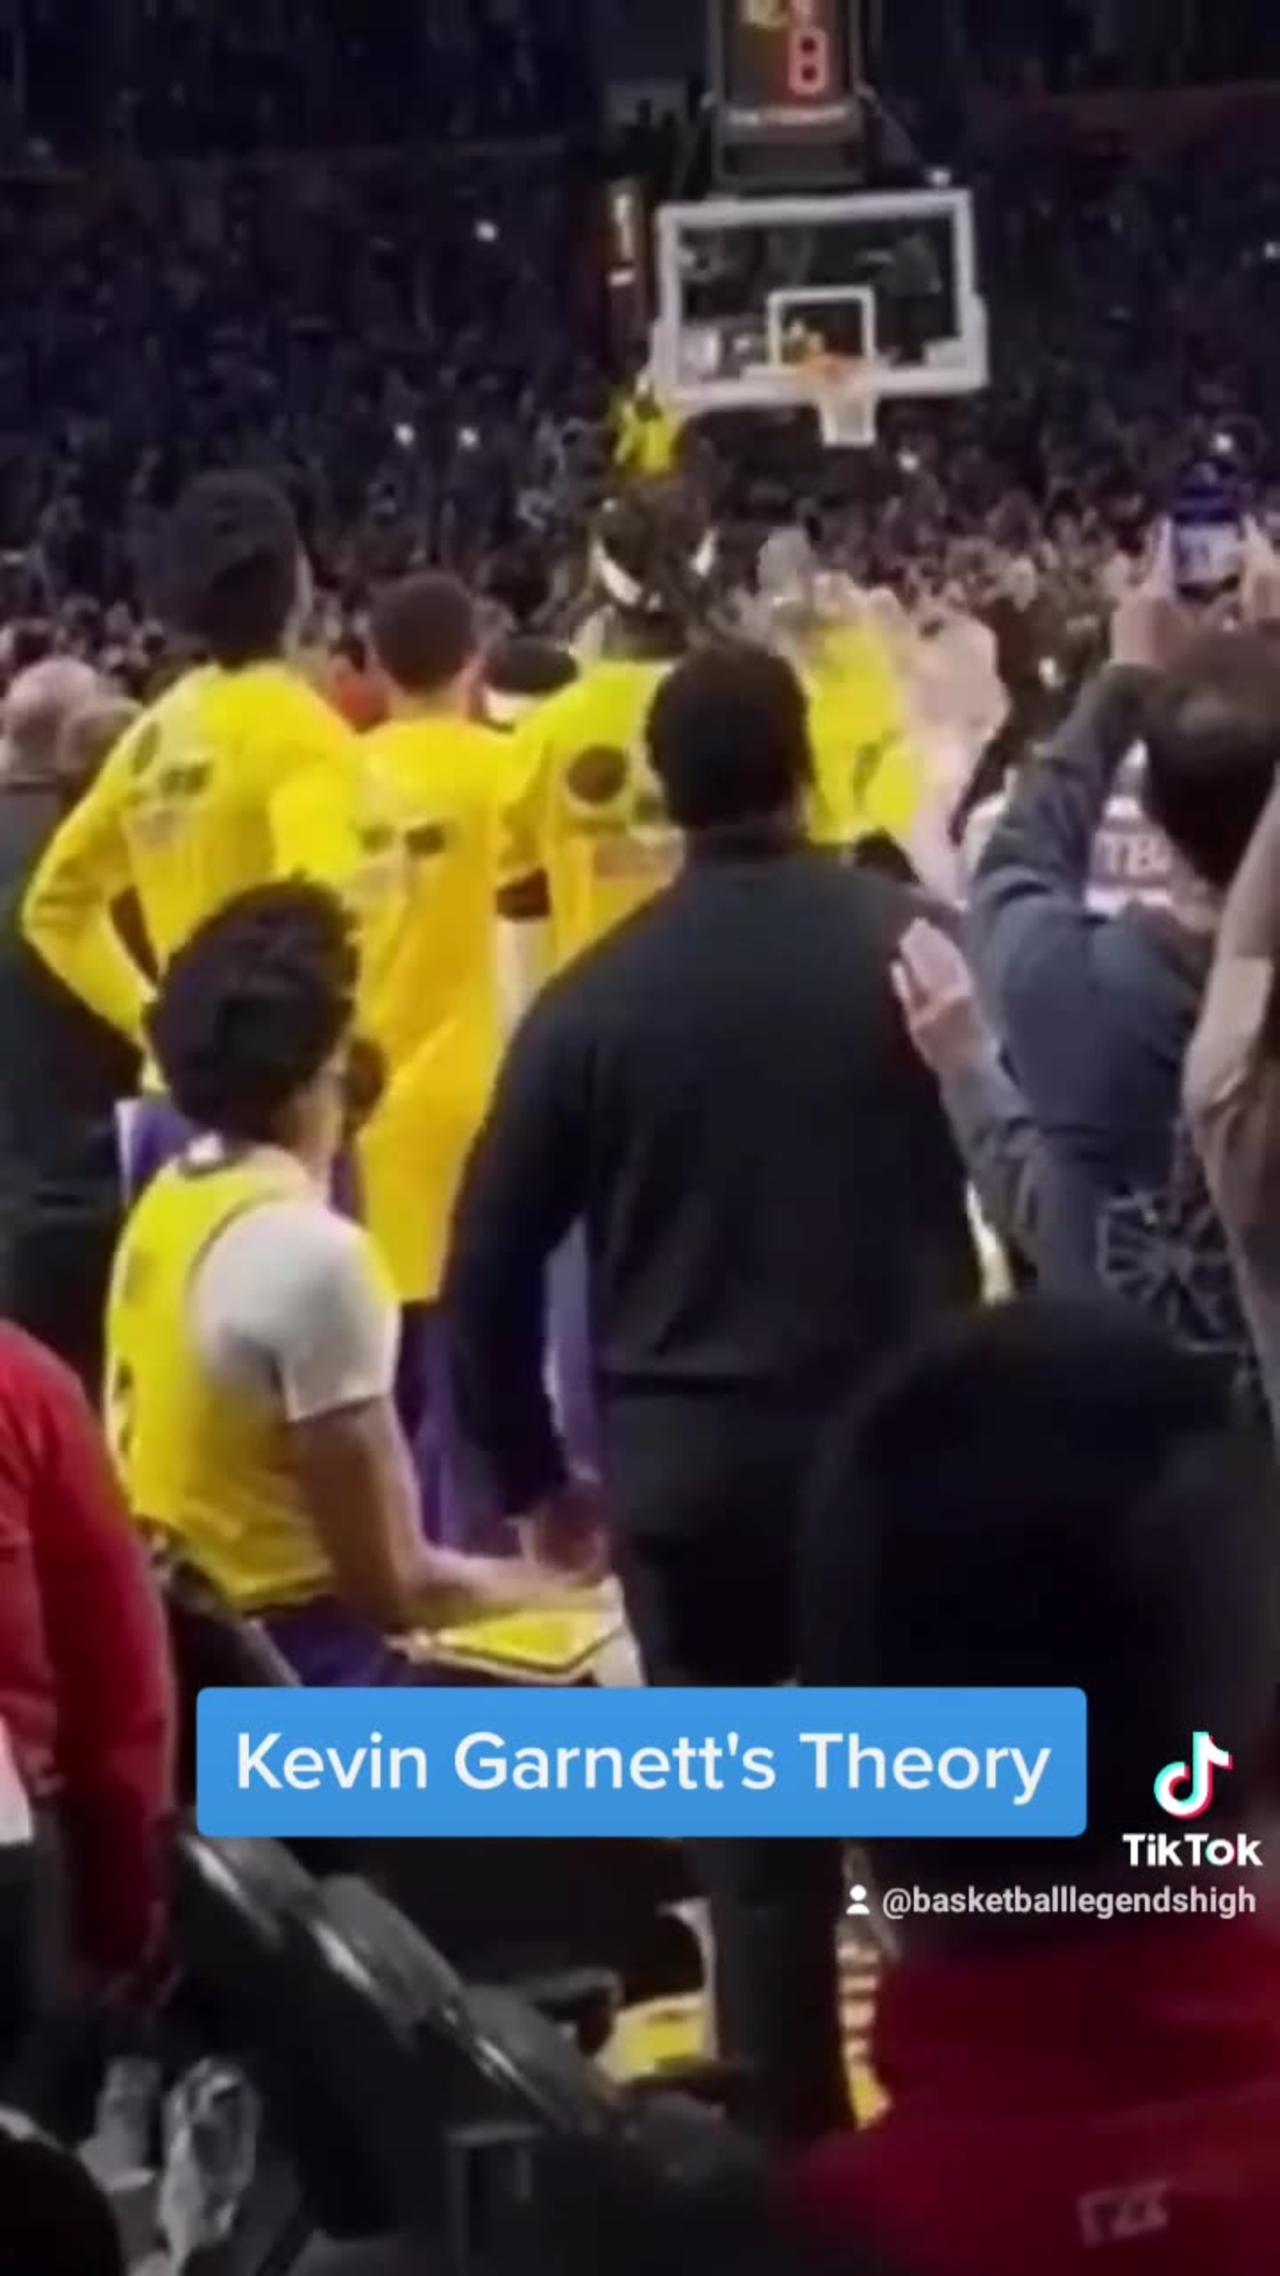 Kevin Garnett's Theory on current Lakers  #nba #basketball #kevingarnett